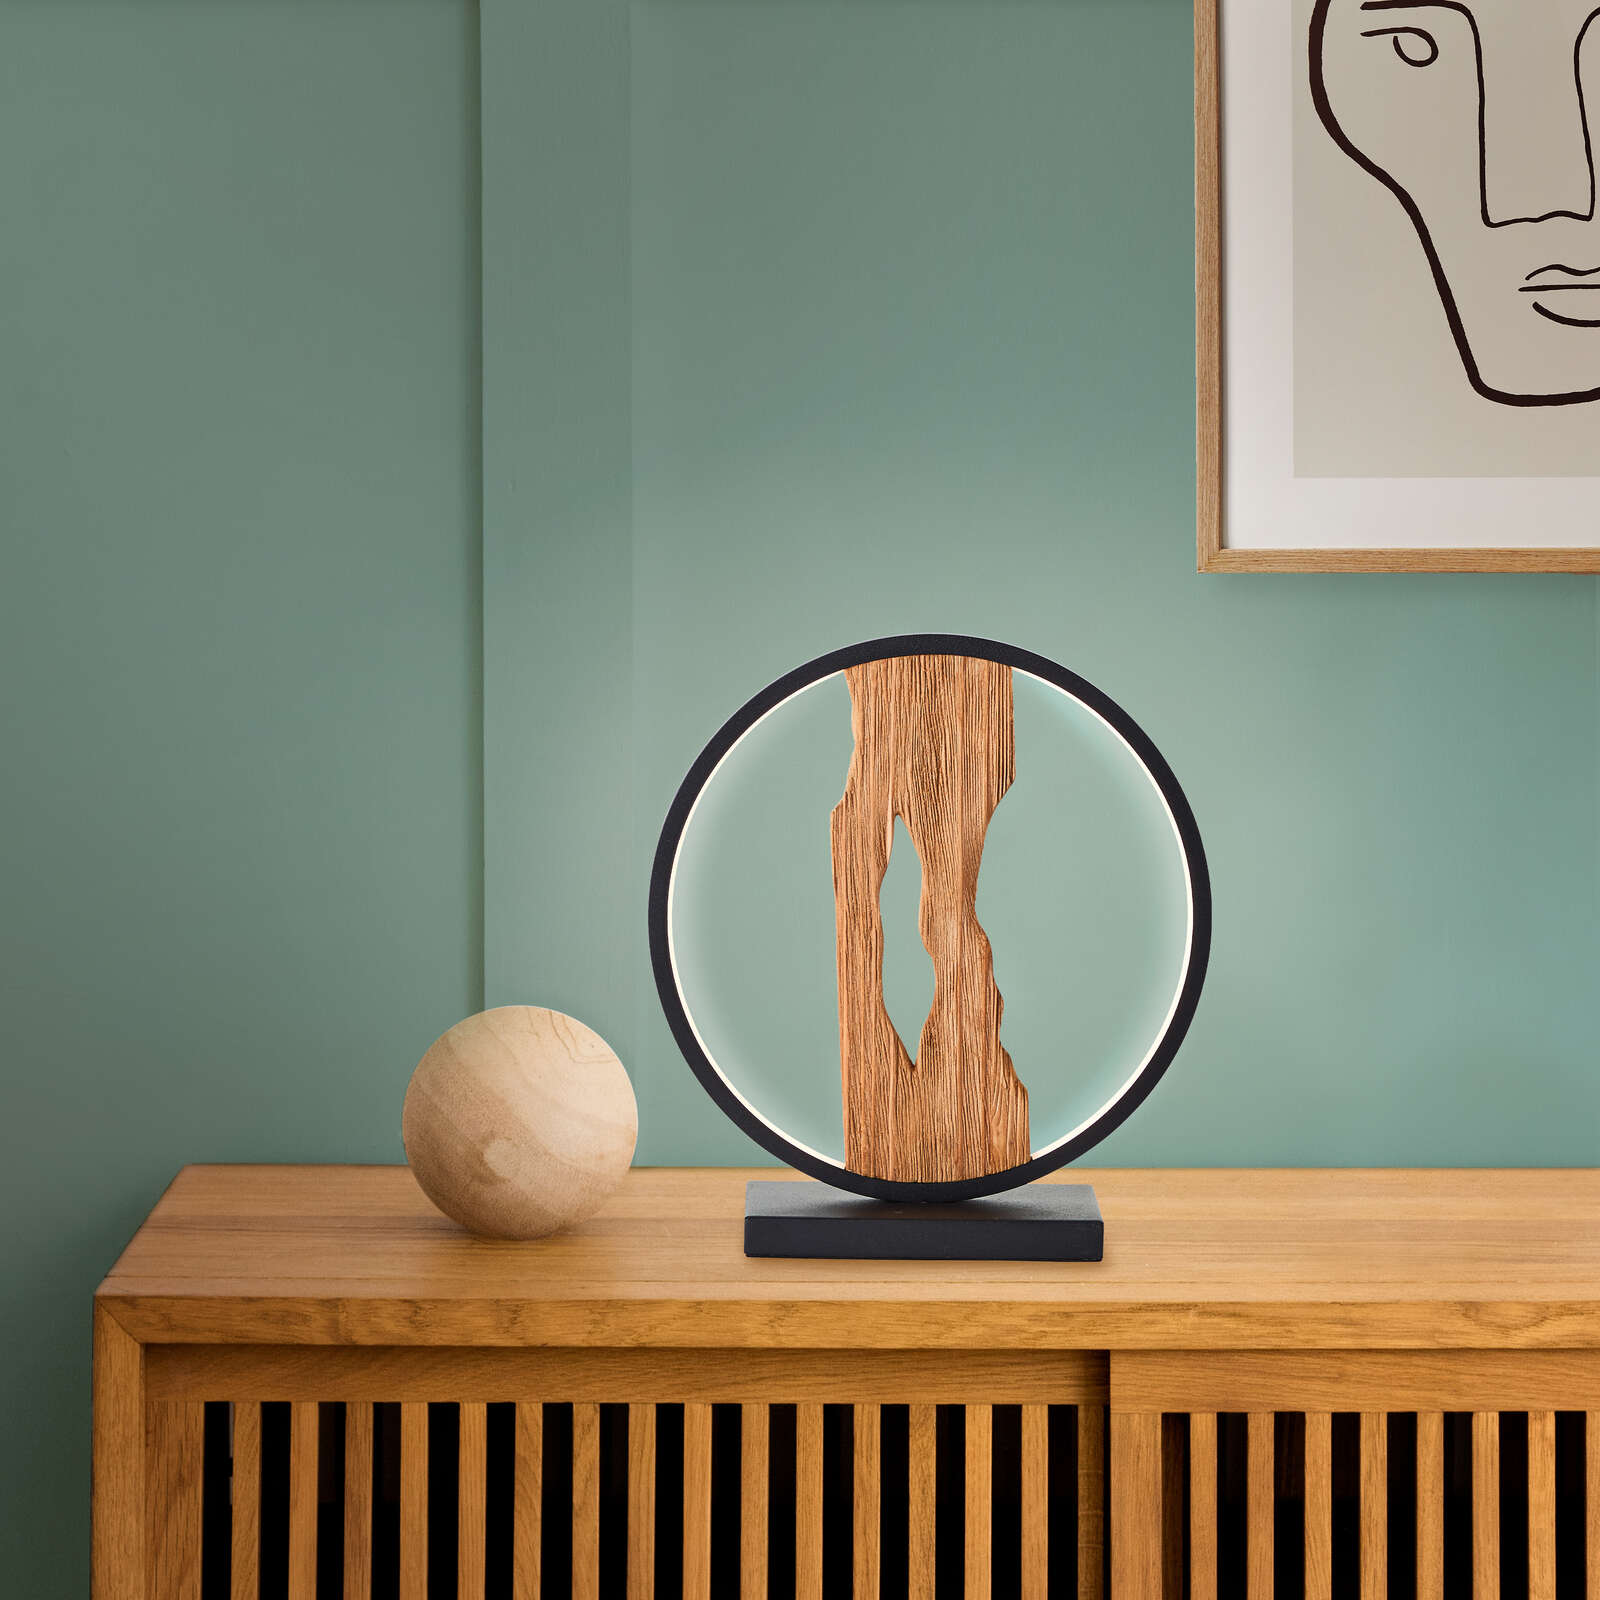             Wooden table lamp - Elea 1 - Brown
        